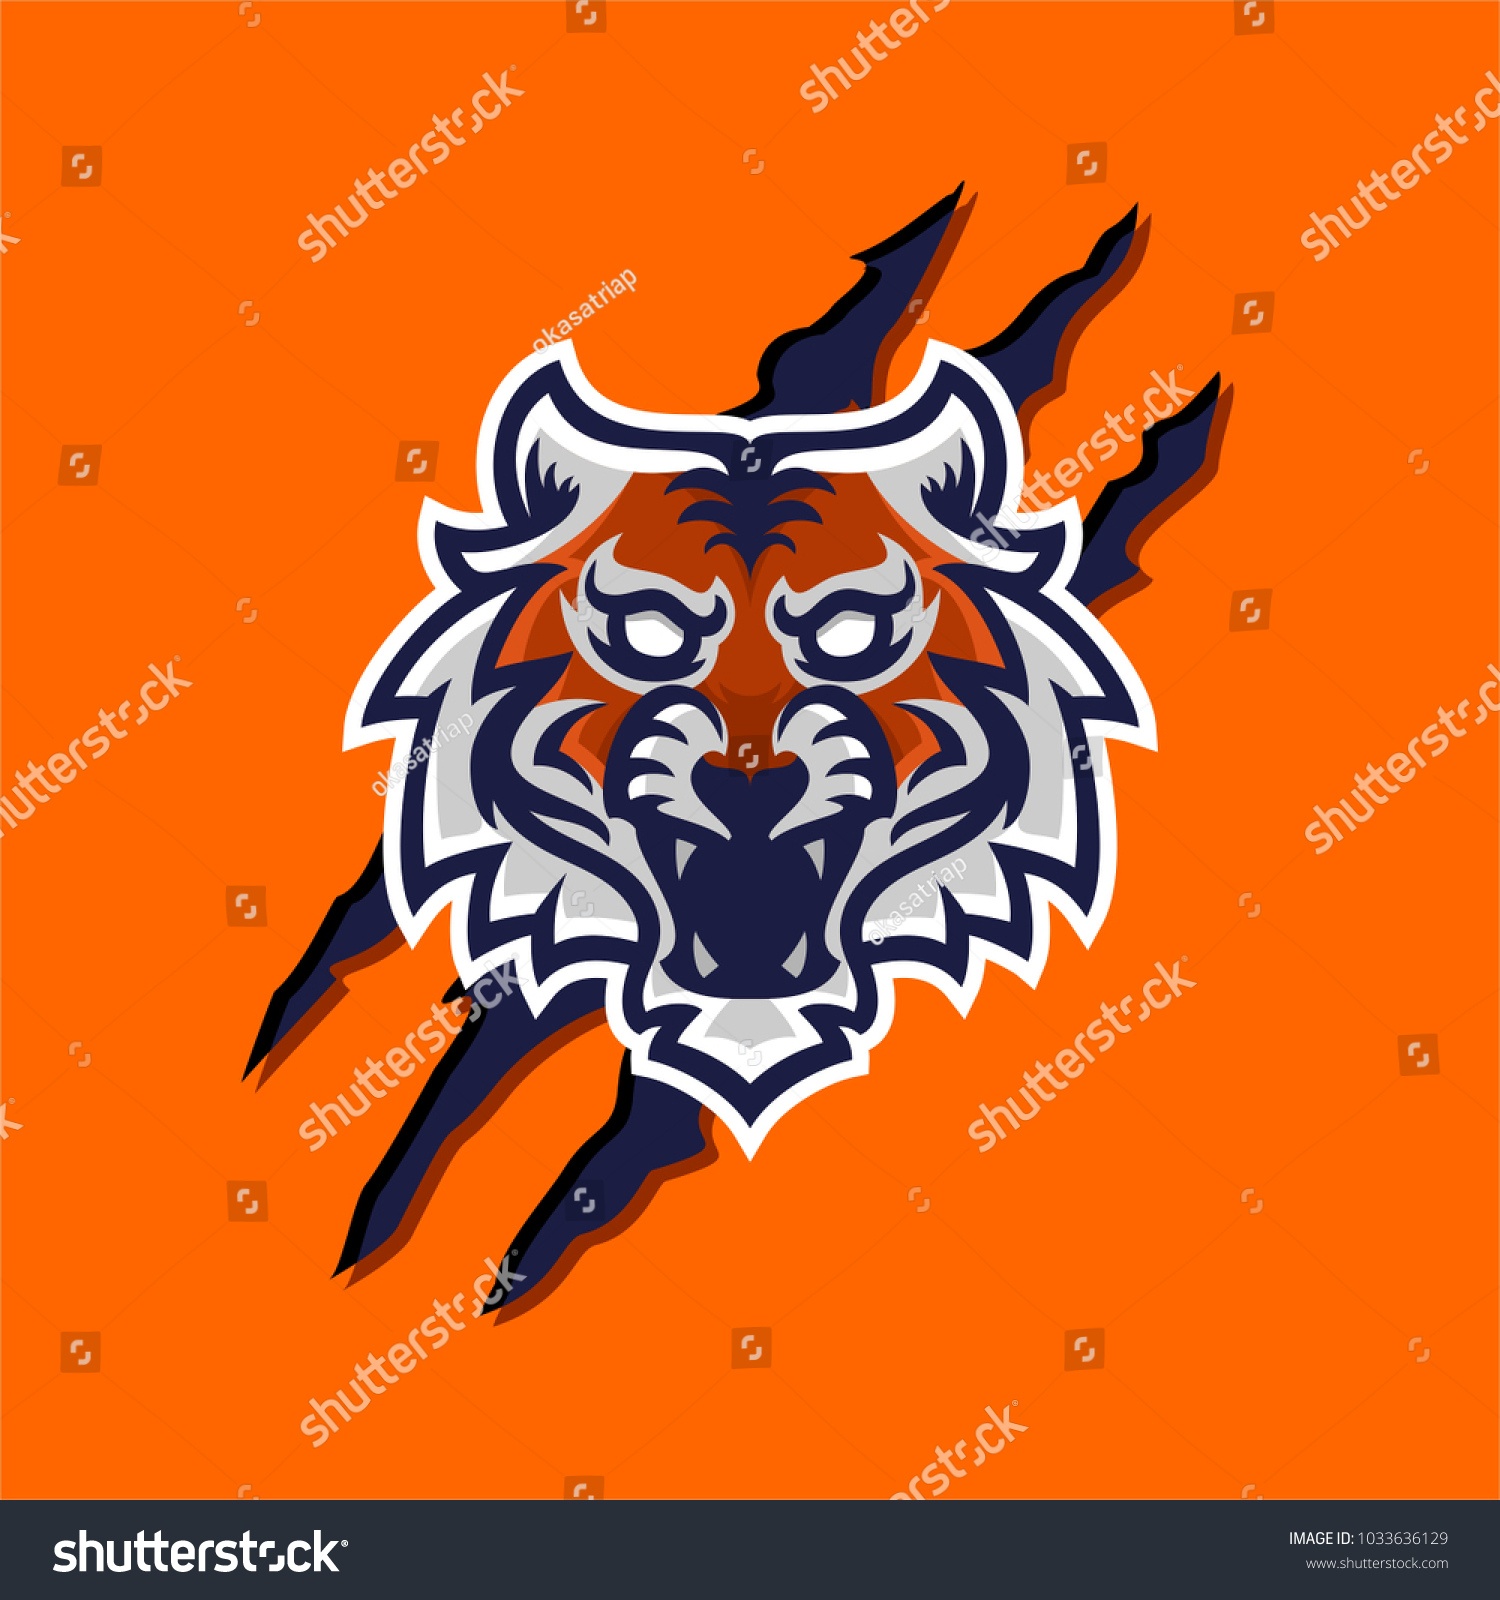 SVG of tiger mascot logo template for sport, game crew, company logo, college team logo svg